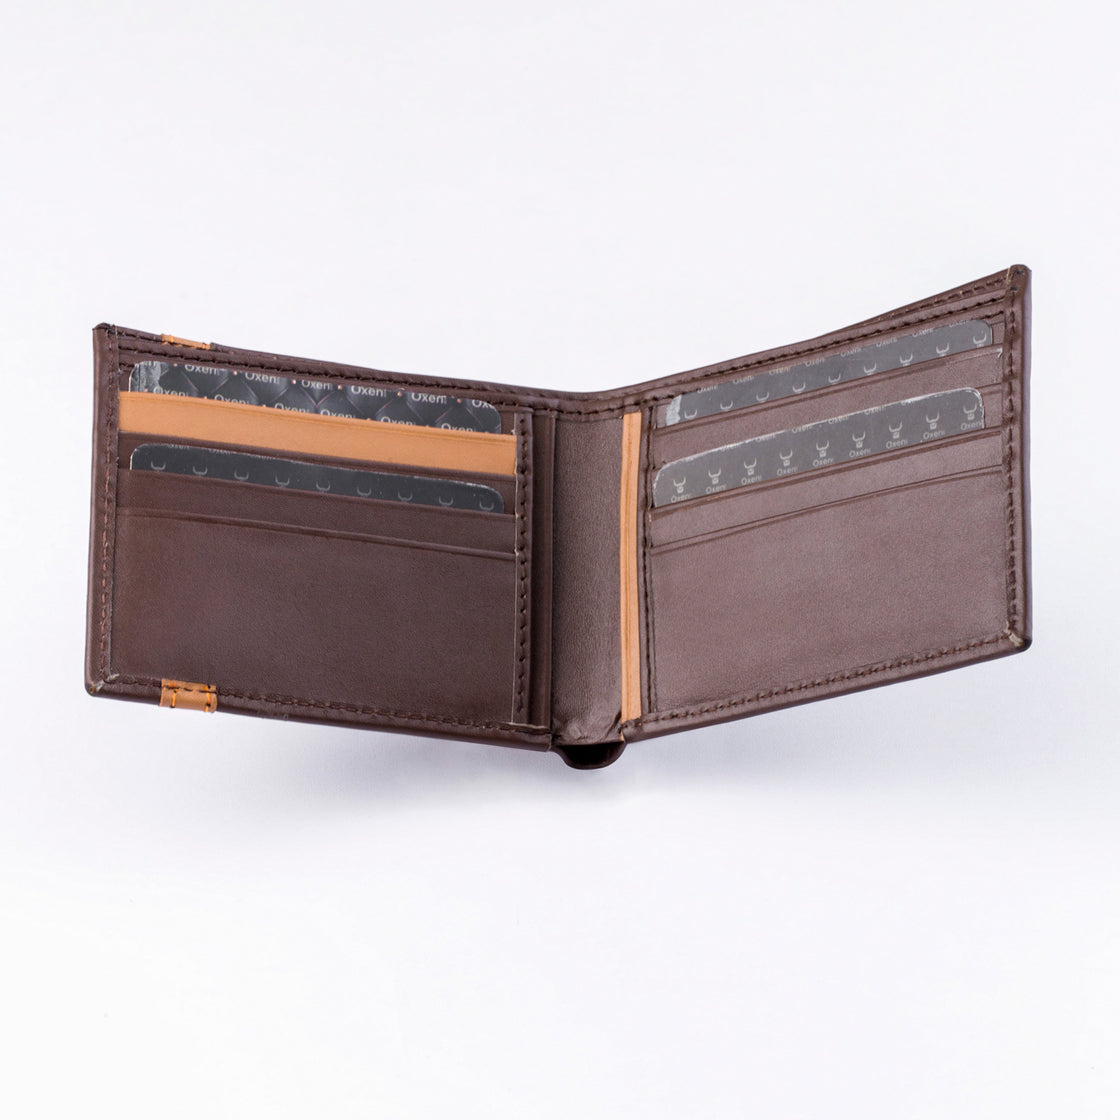 Majestiq Leather Wallet